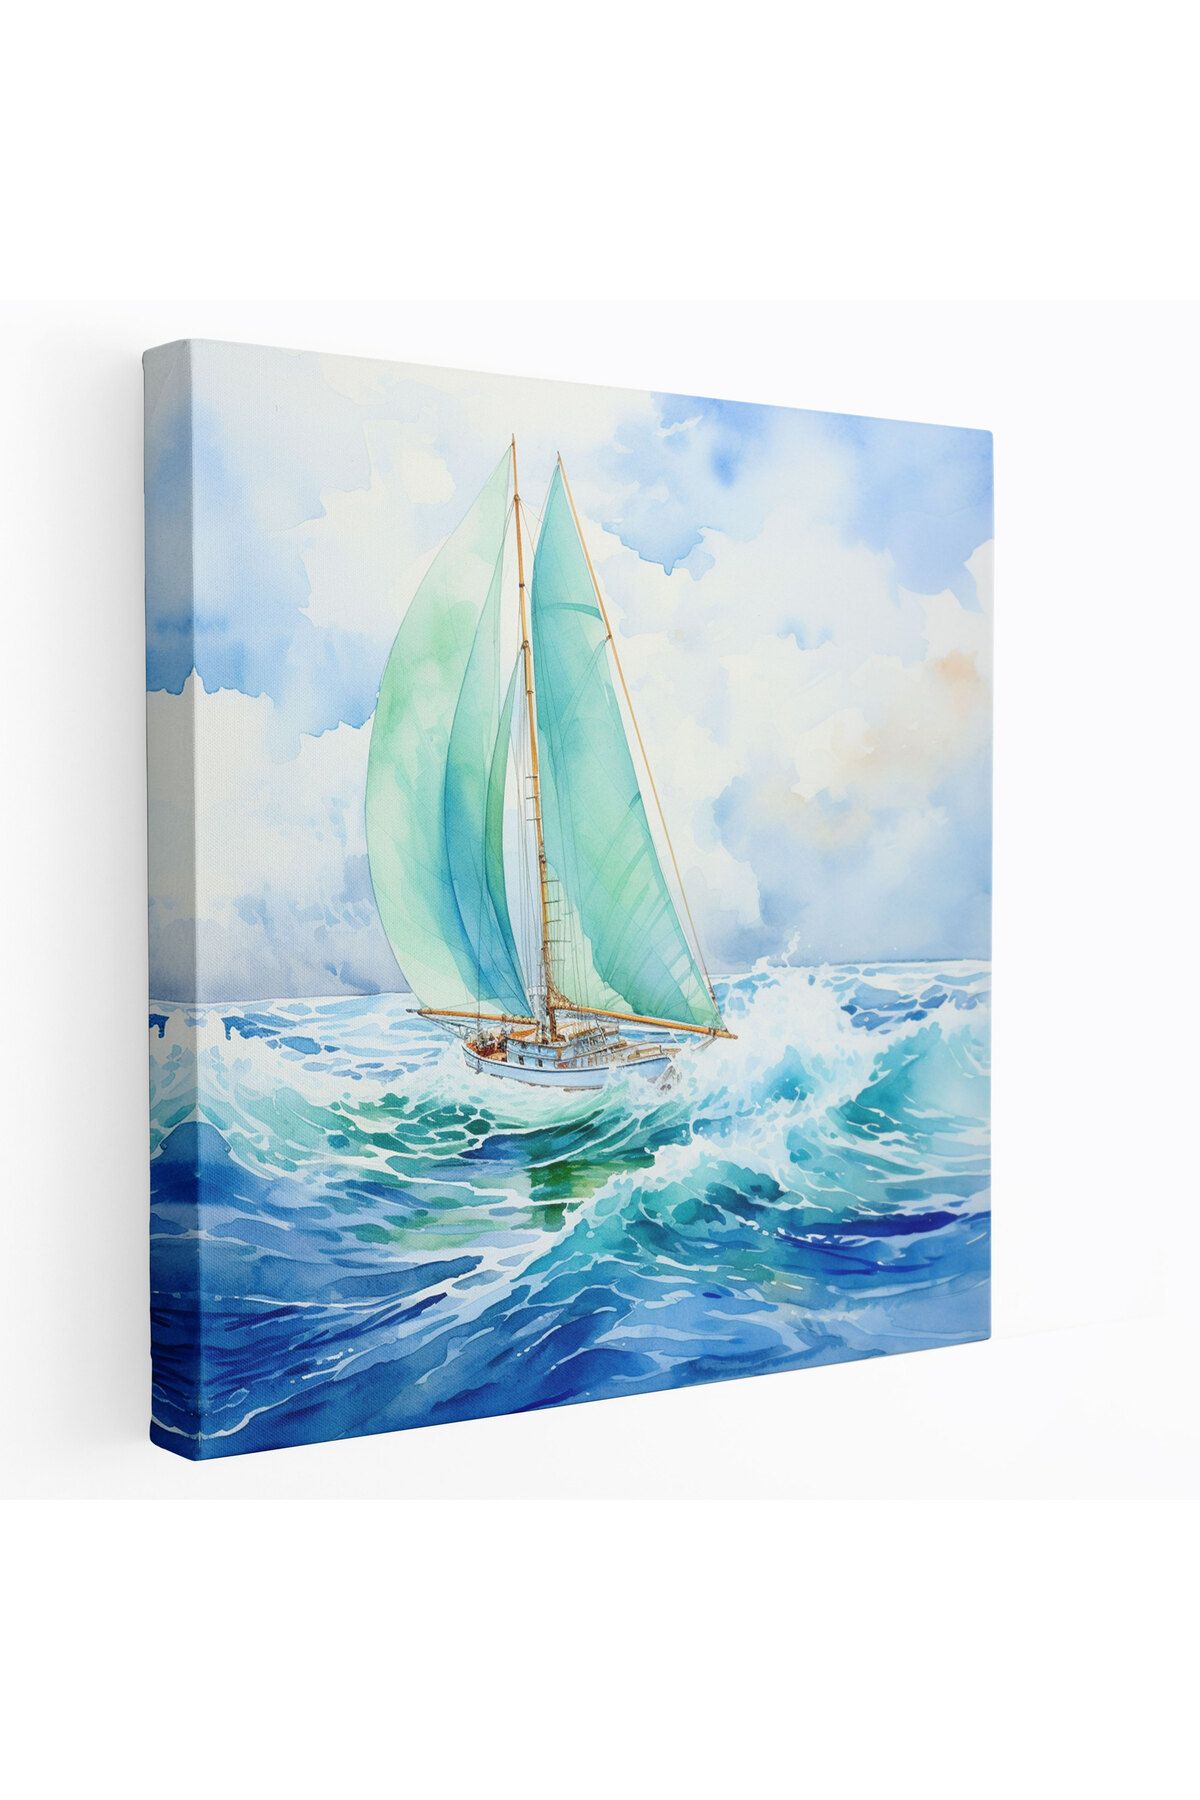 PaintedAnarchy Yelkenli Kanvas Tablosu, turkuaz dalgaları, duvar sanatı, yelkenli, tuval duvar sanatı, tuval